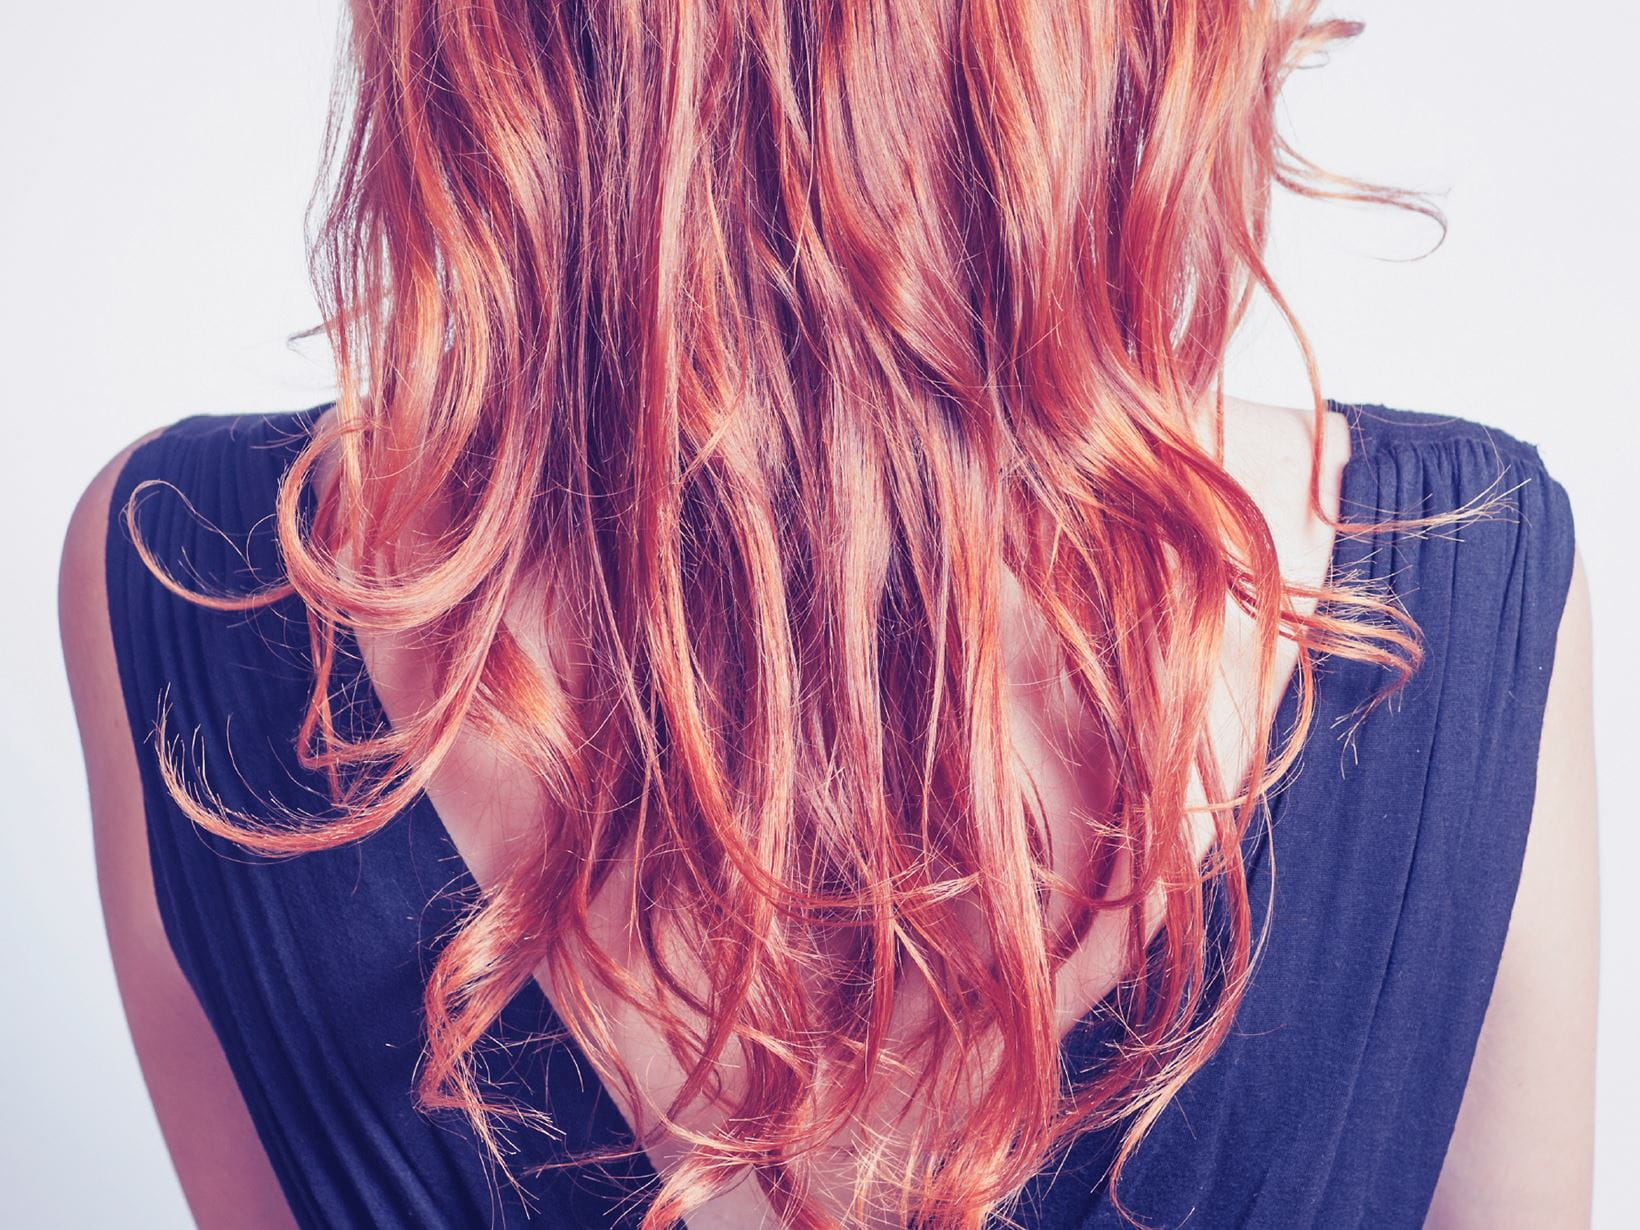 Rote Haarfarbe